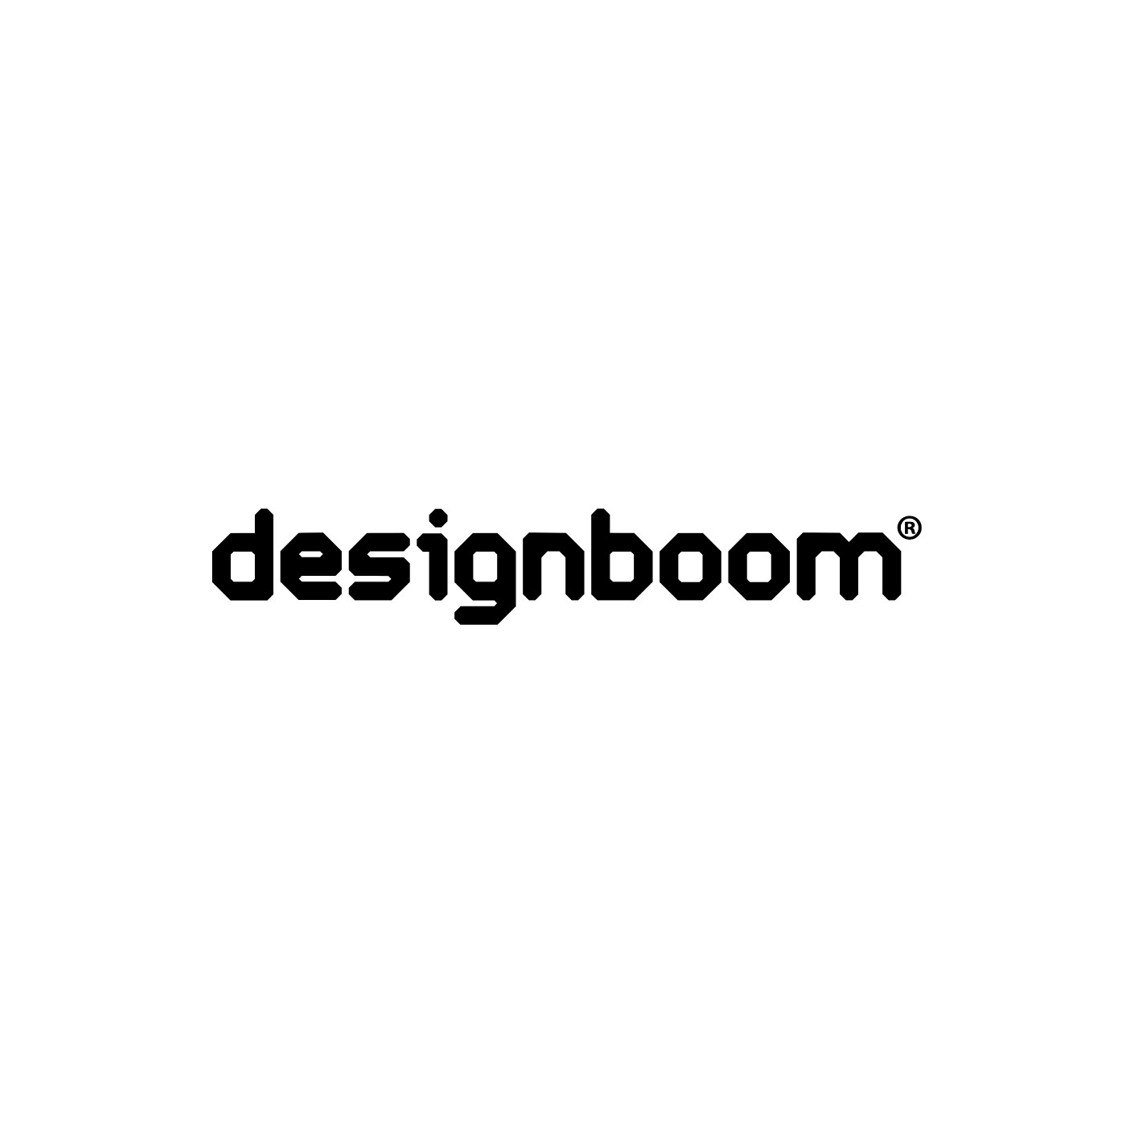 Designboom, 2019 MMAPROJECTS S.R.L.